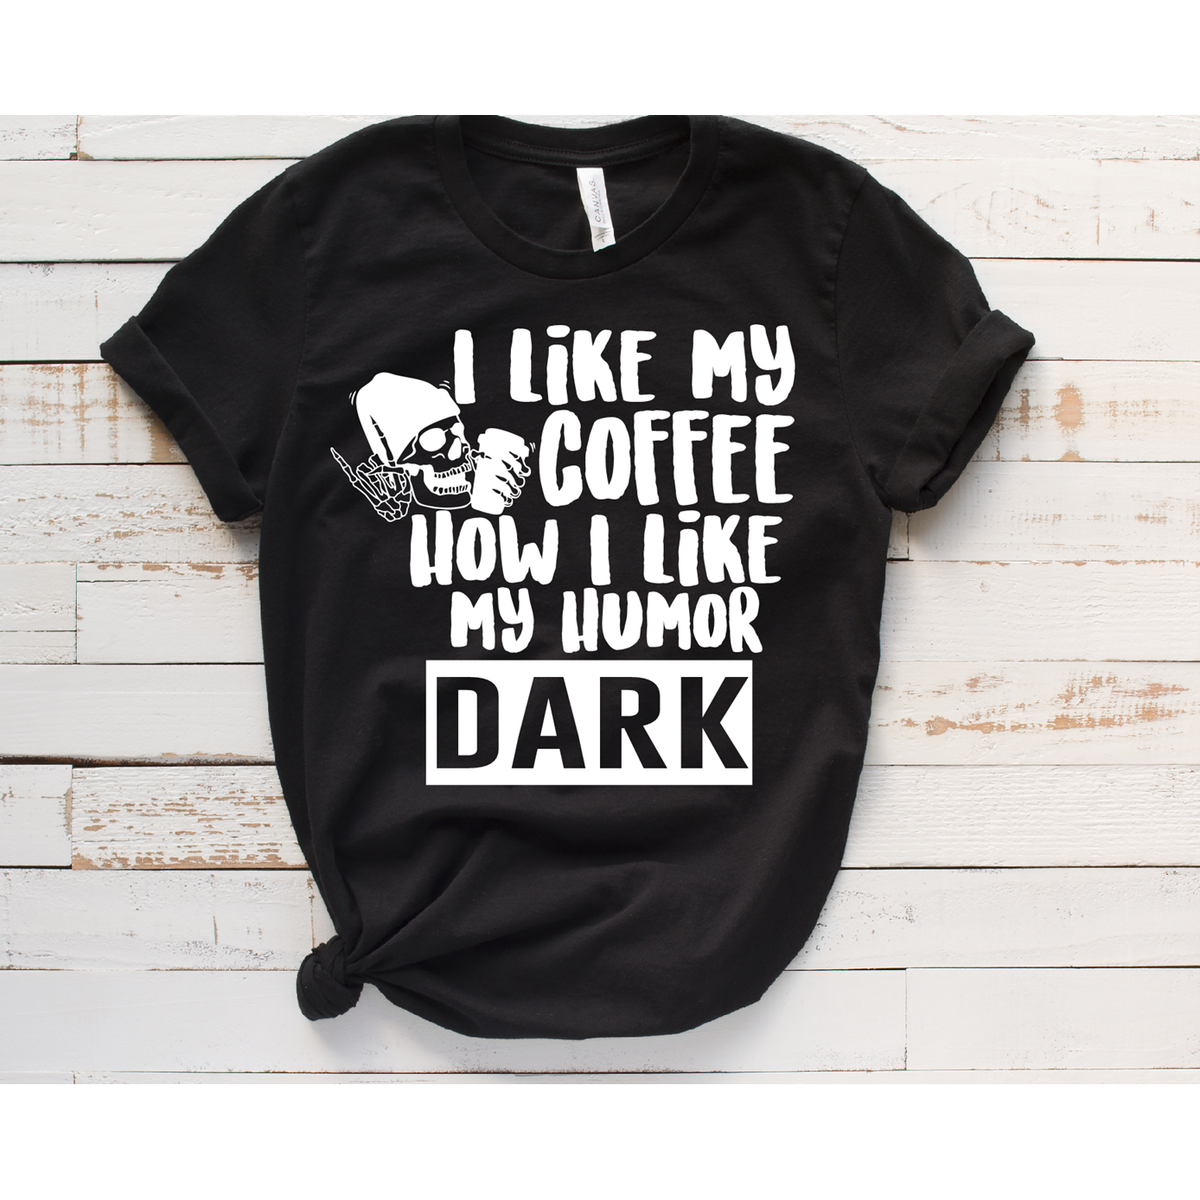 Coffee Dark like my Humor Tee or Sweatshirt